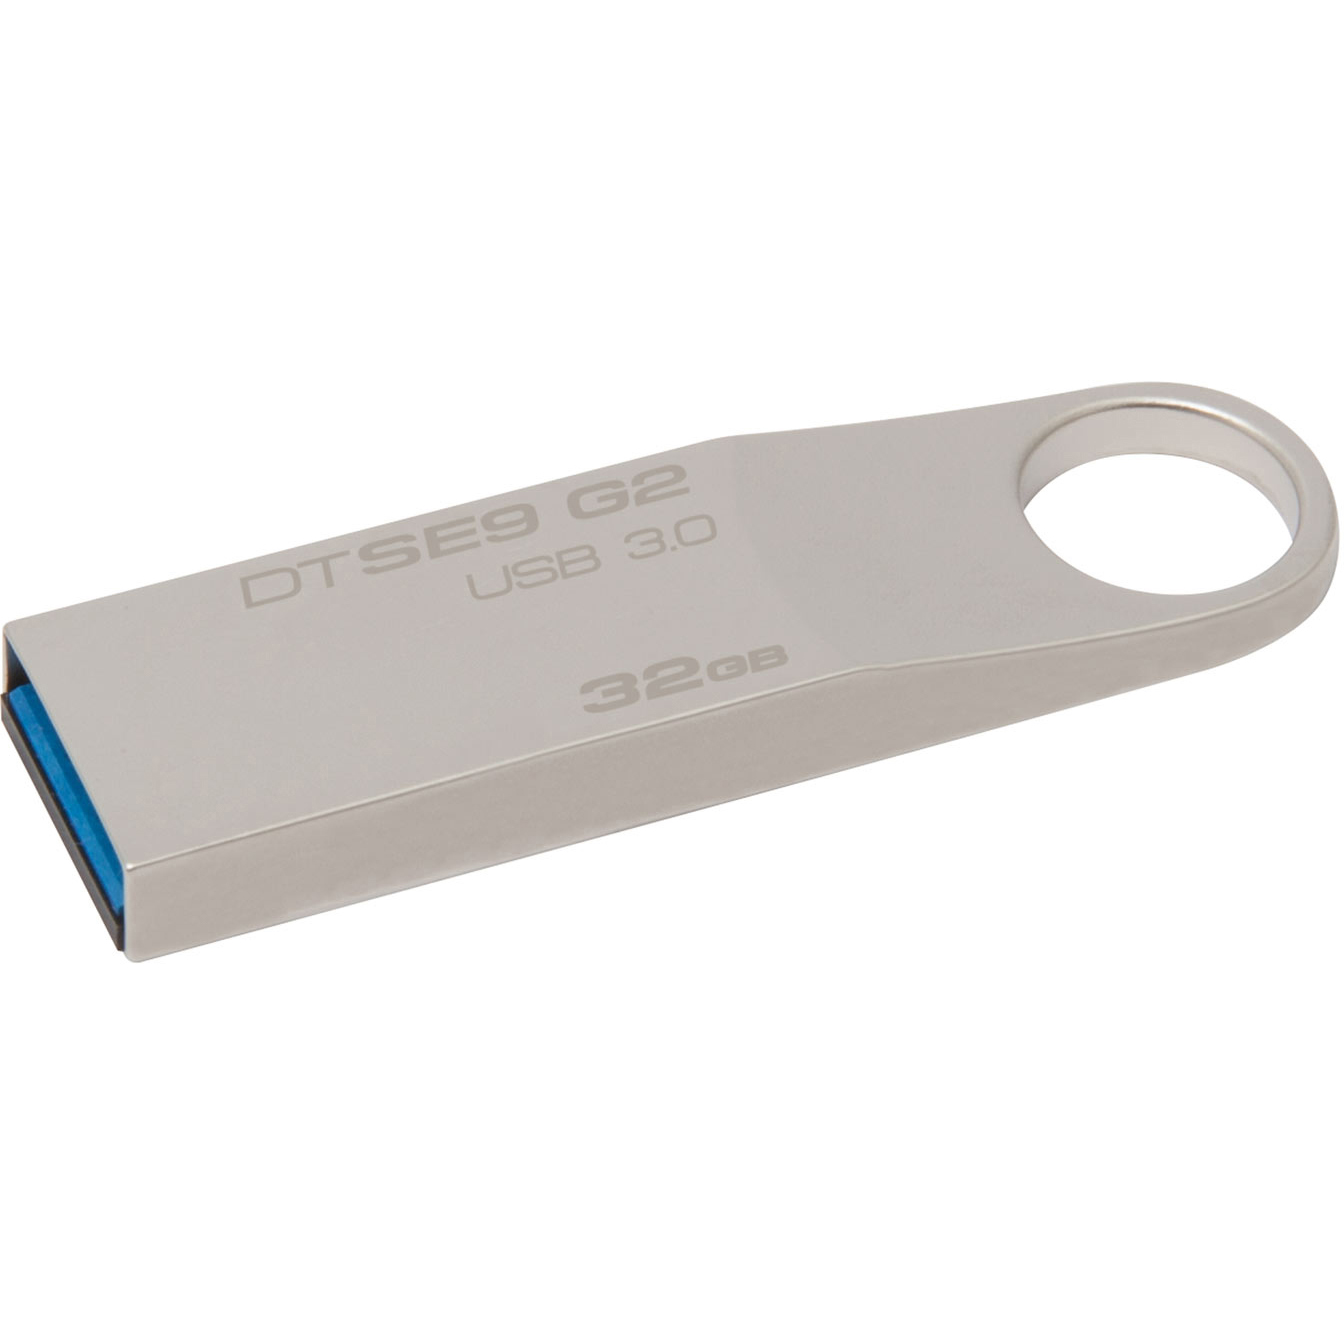 Original Kingston Data Traveler SE9 G2 32GB Silver USB 3.0 Flash Drive (DTSE9G2/32GB)